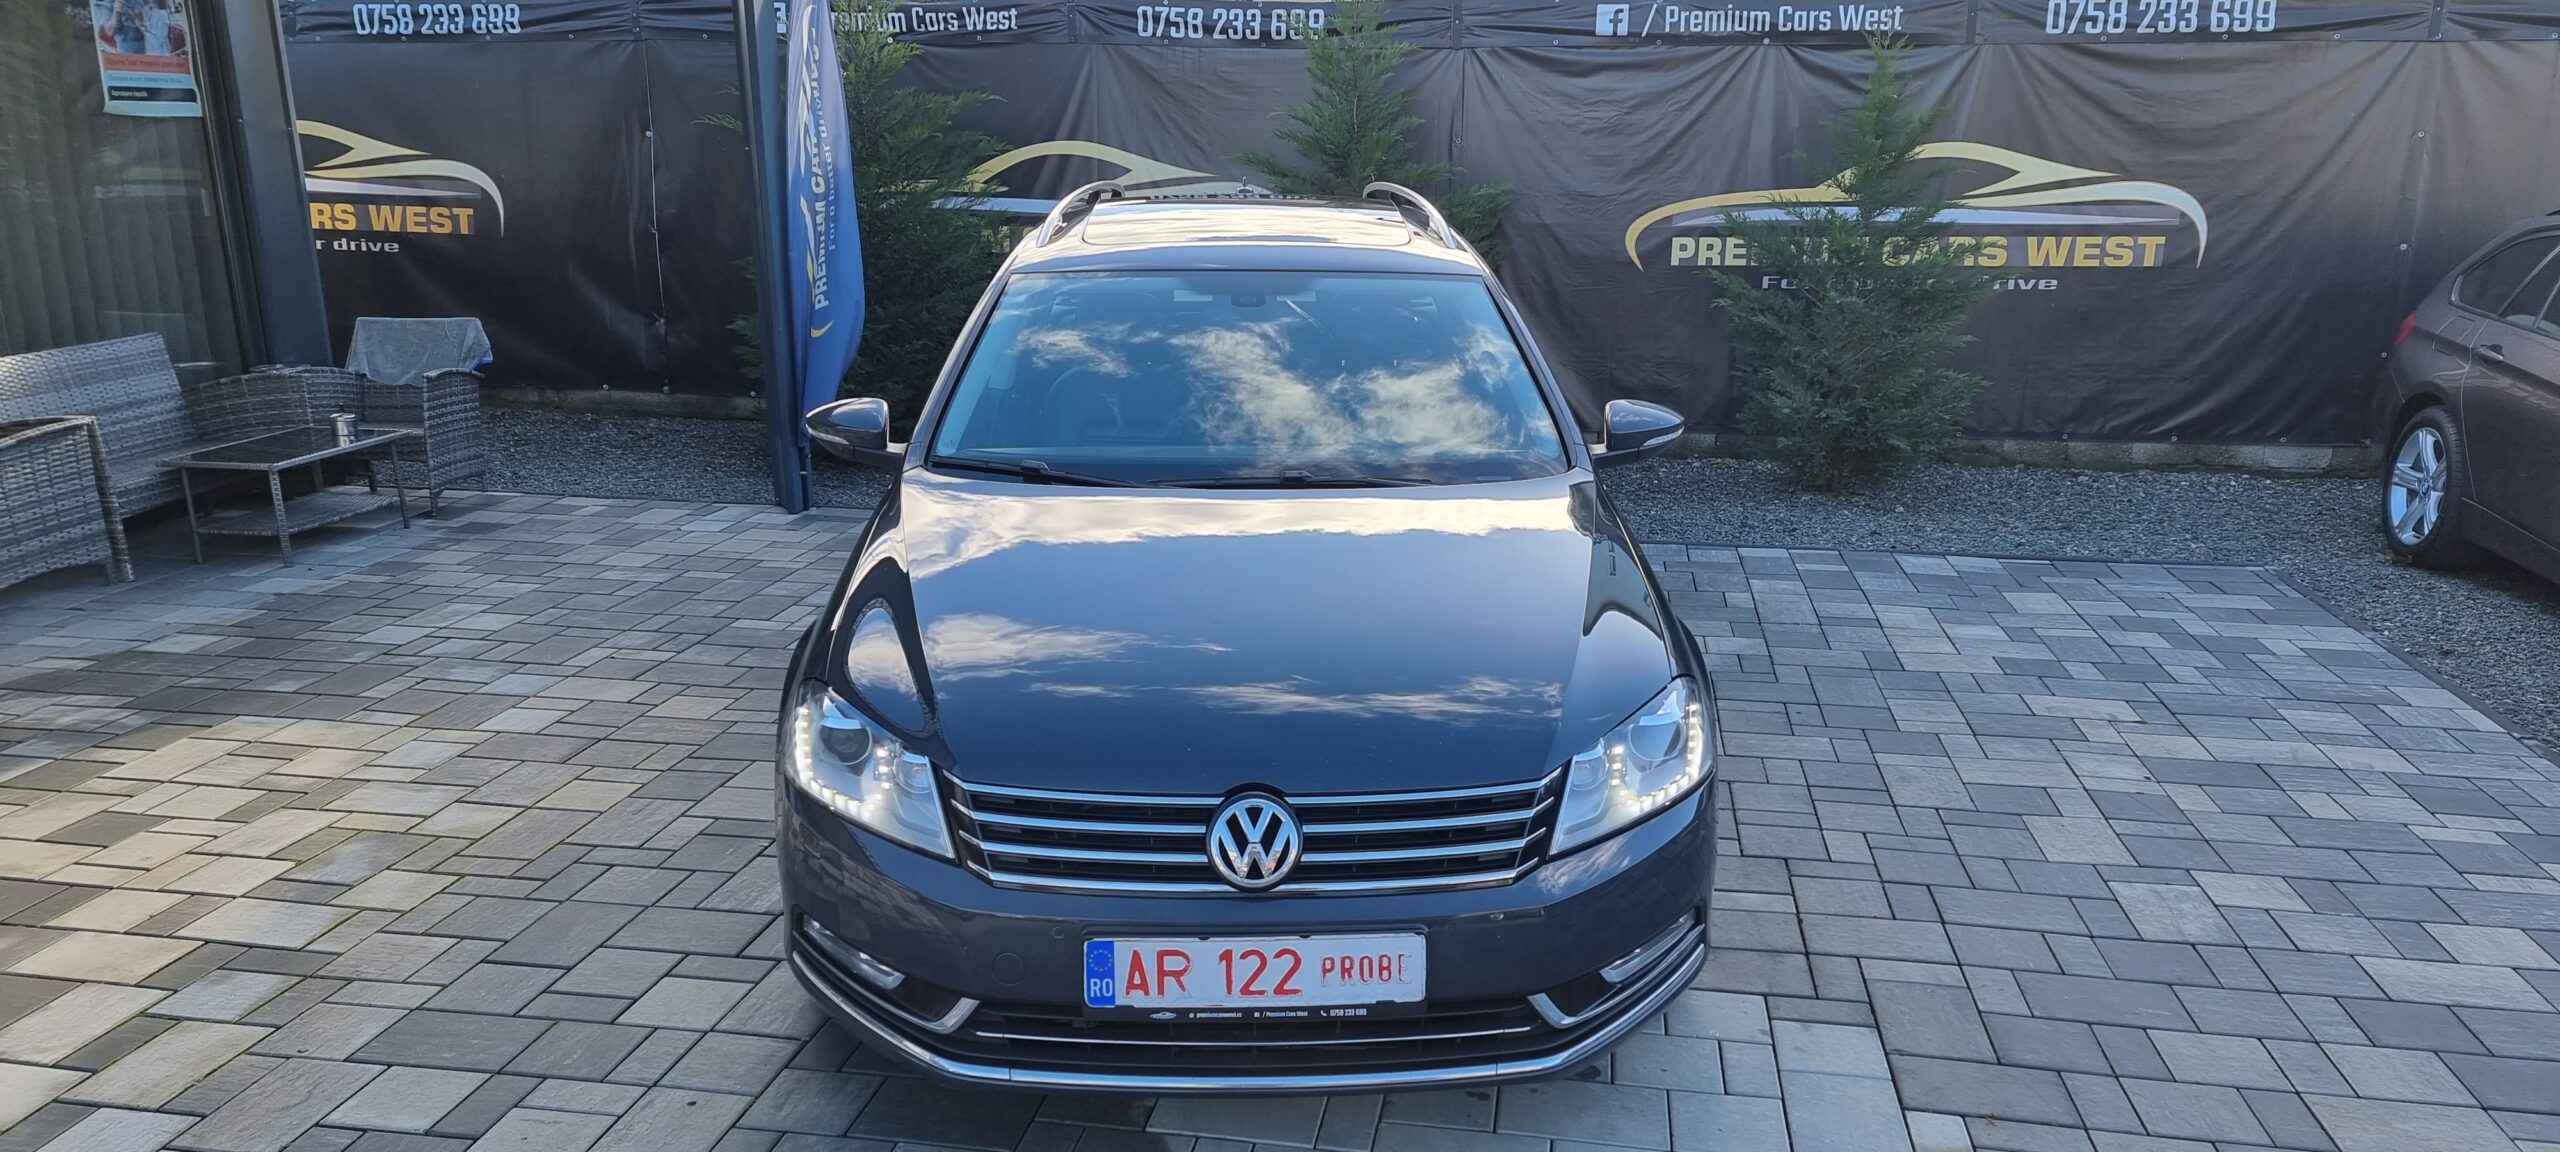 VW PASSAT HIGHLINE, 2.0 TDI, 140 CP, EURO 5, AN 2011